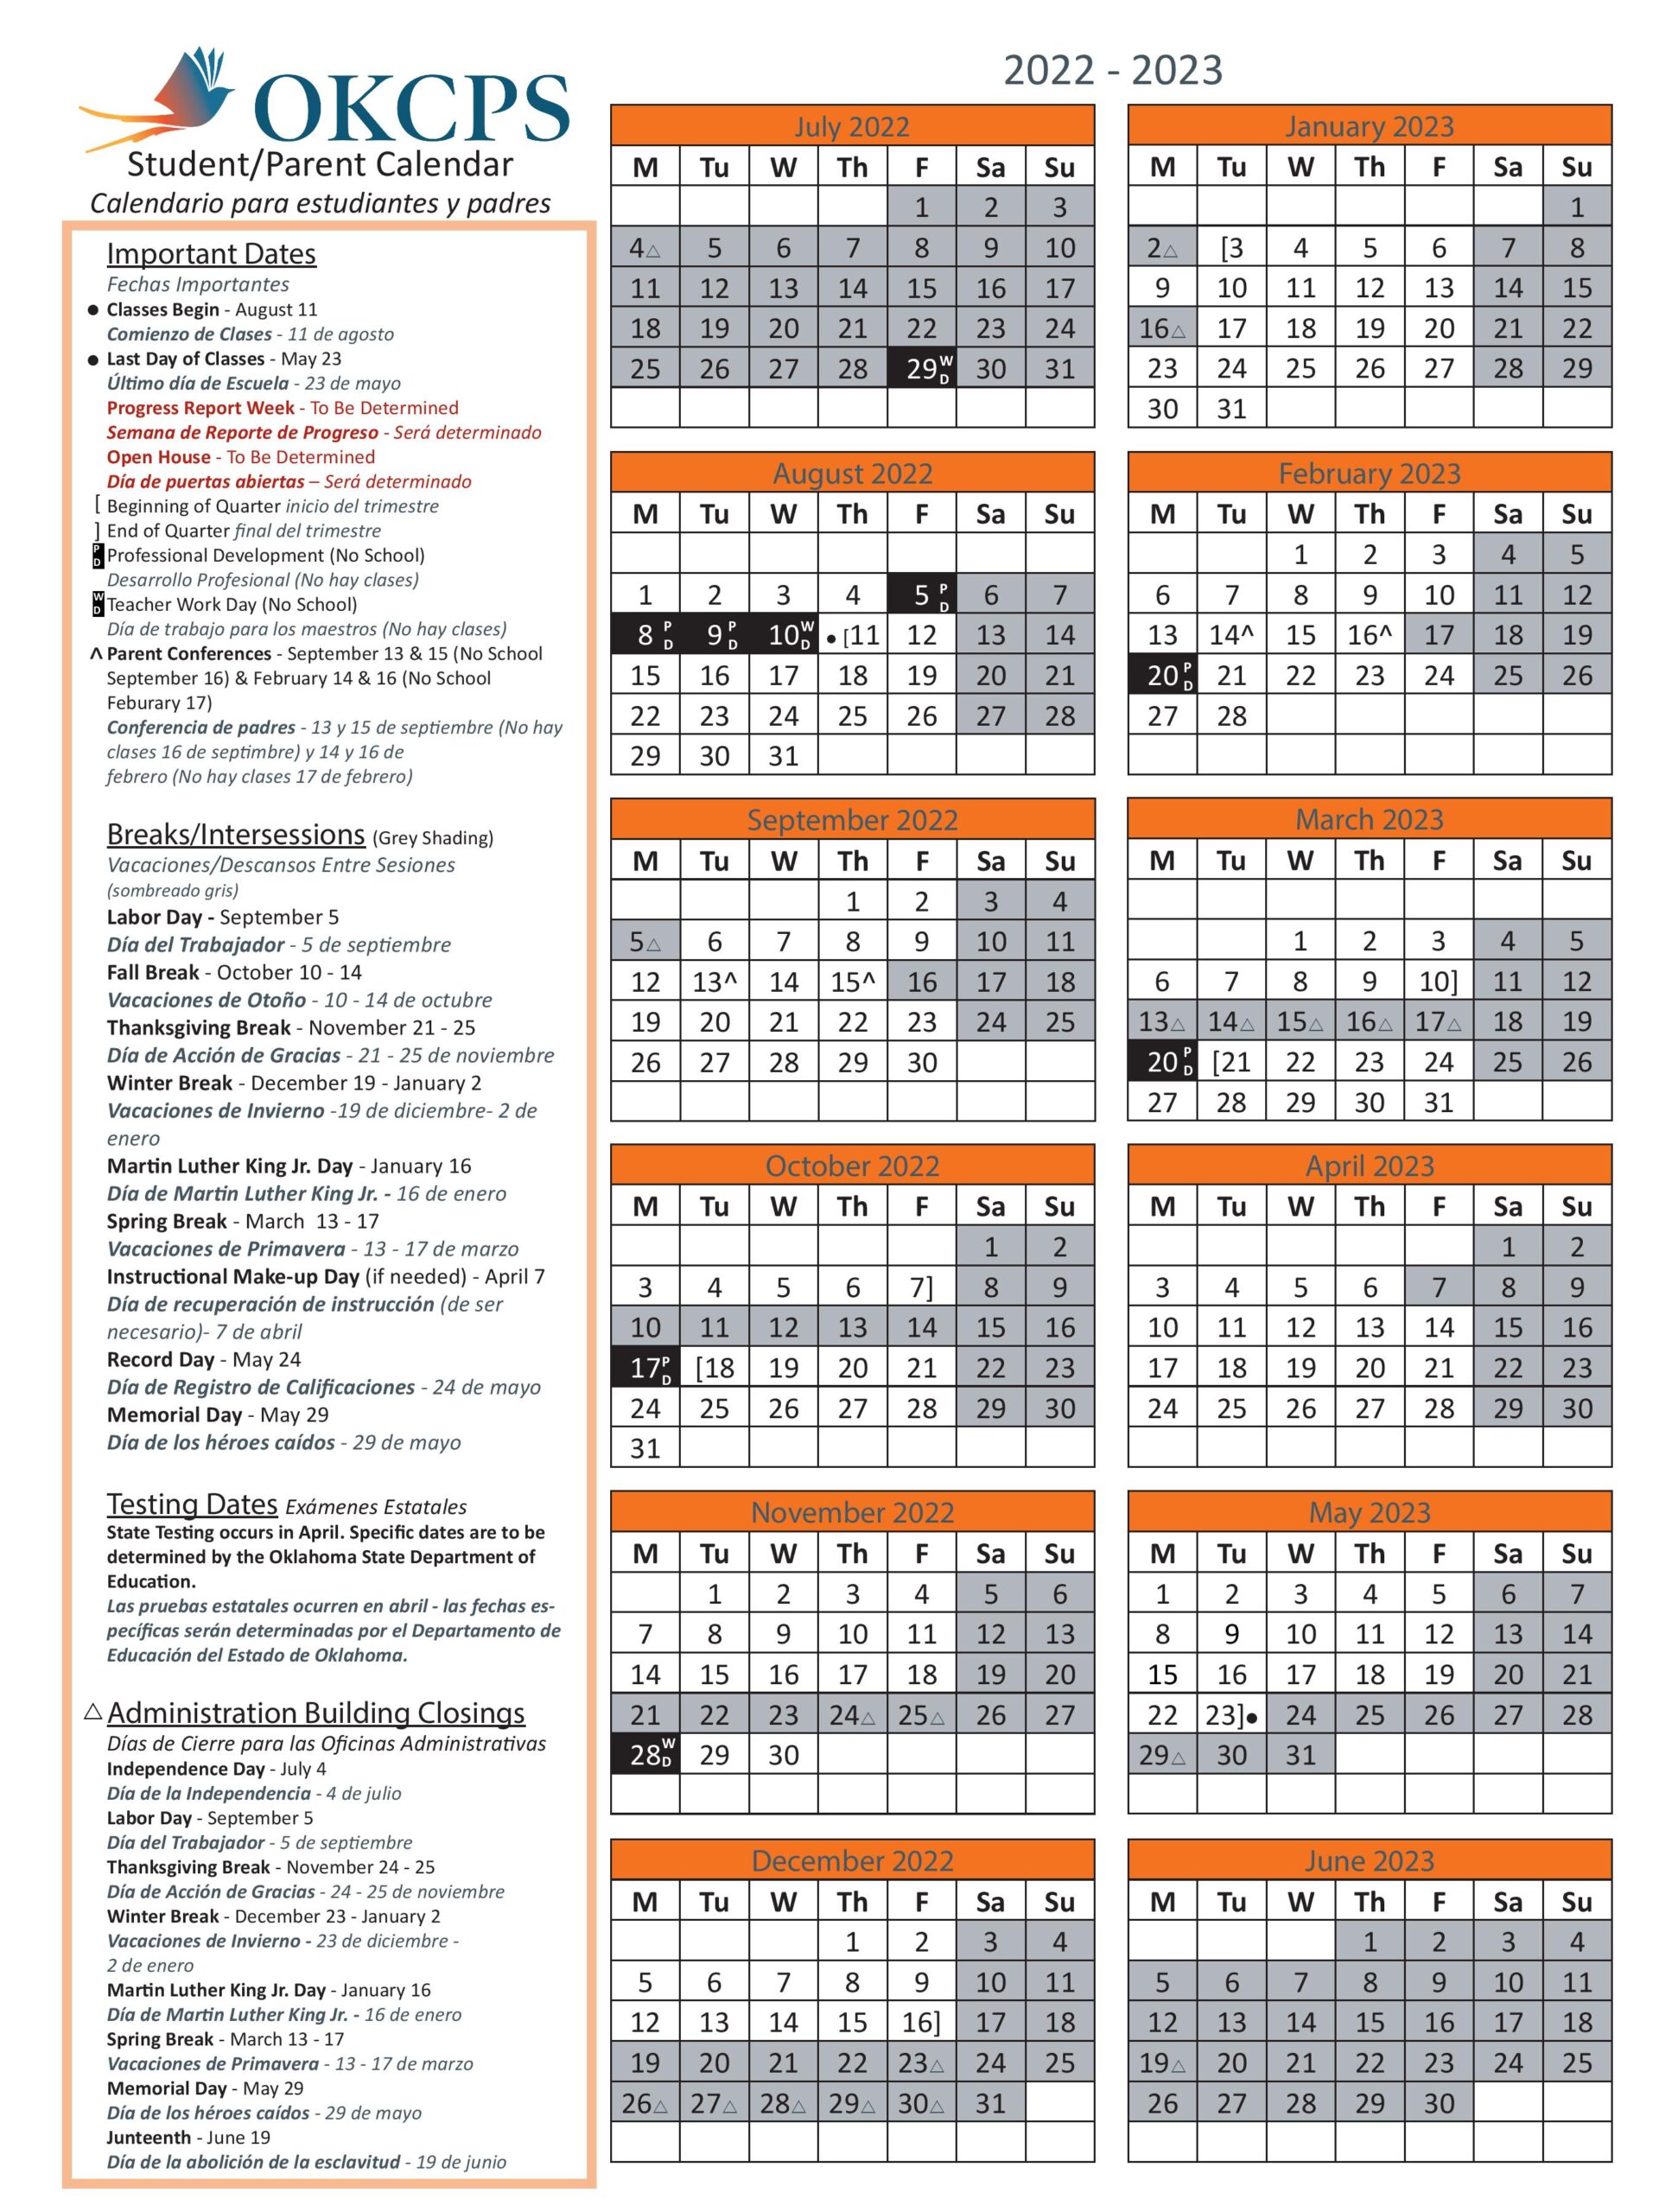 Oklahoma City Public Schools Calendar Holidays 2022-2023 PDF